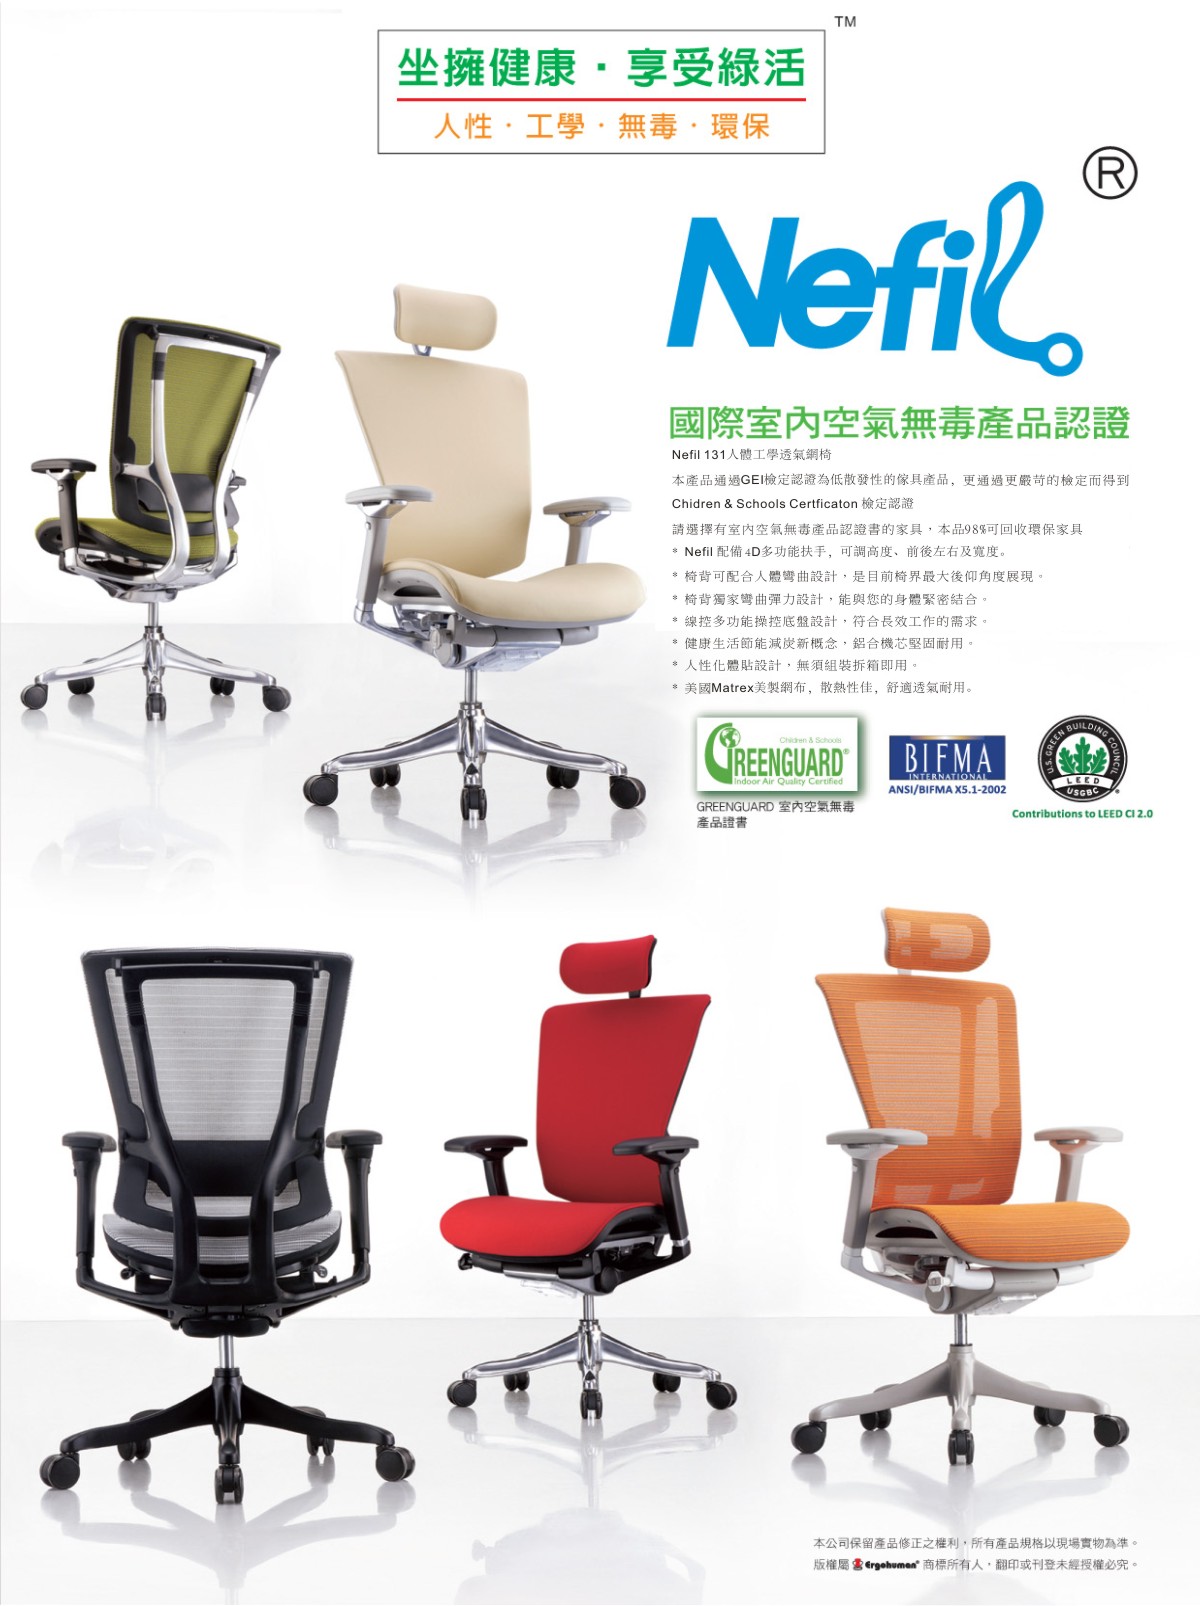 Nefil 131人體工學椅-電腦網椅坐擁健康享受綠活無毒產品認證